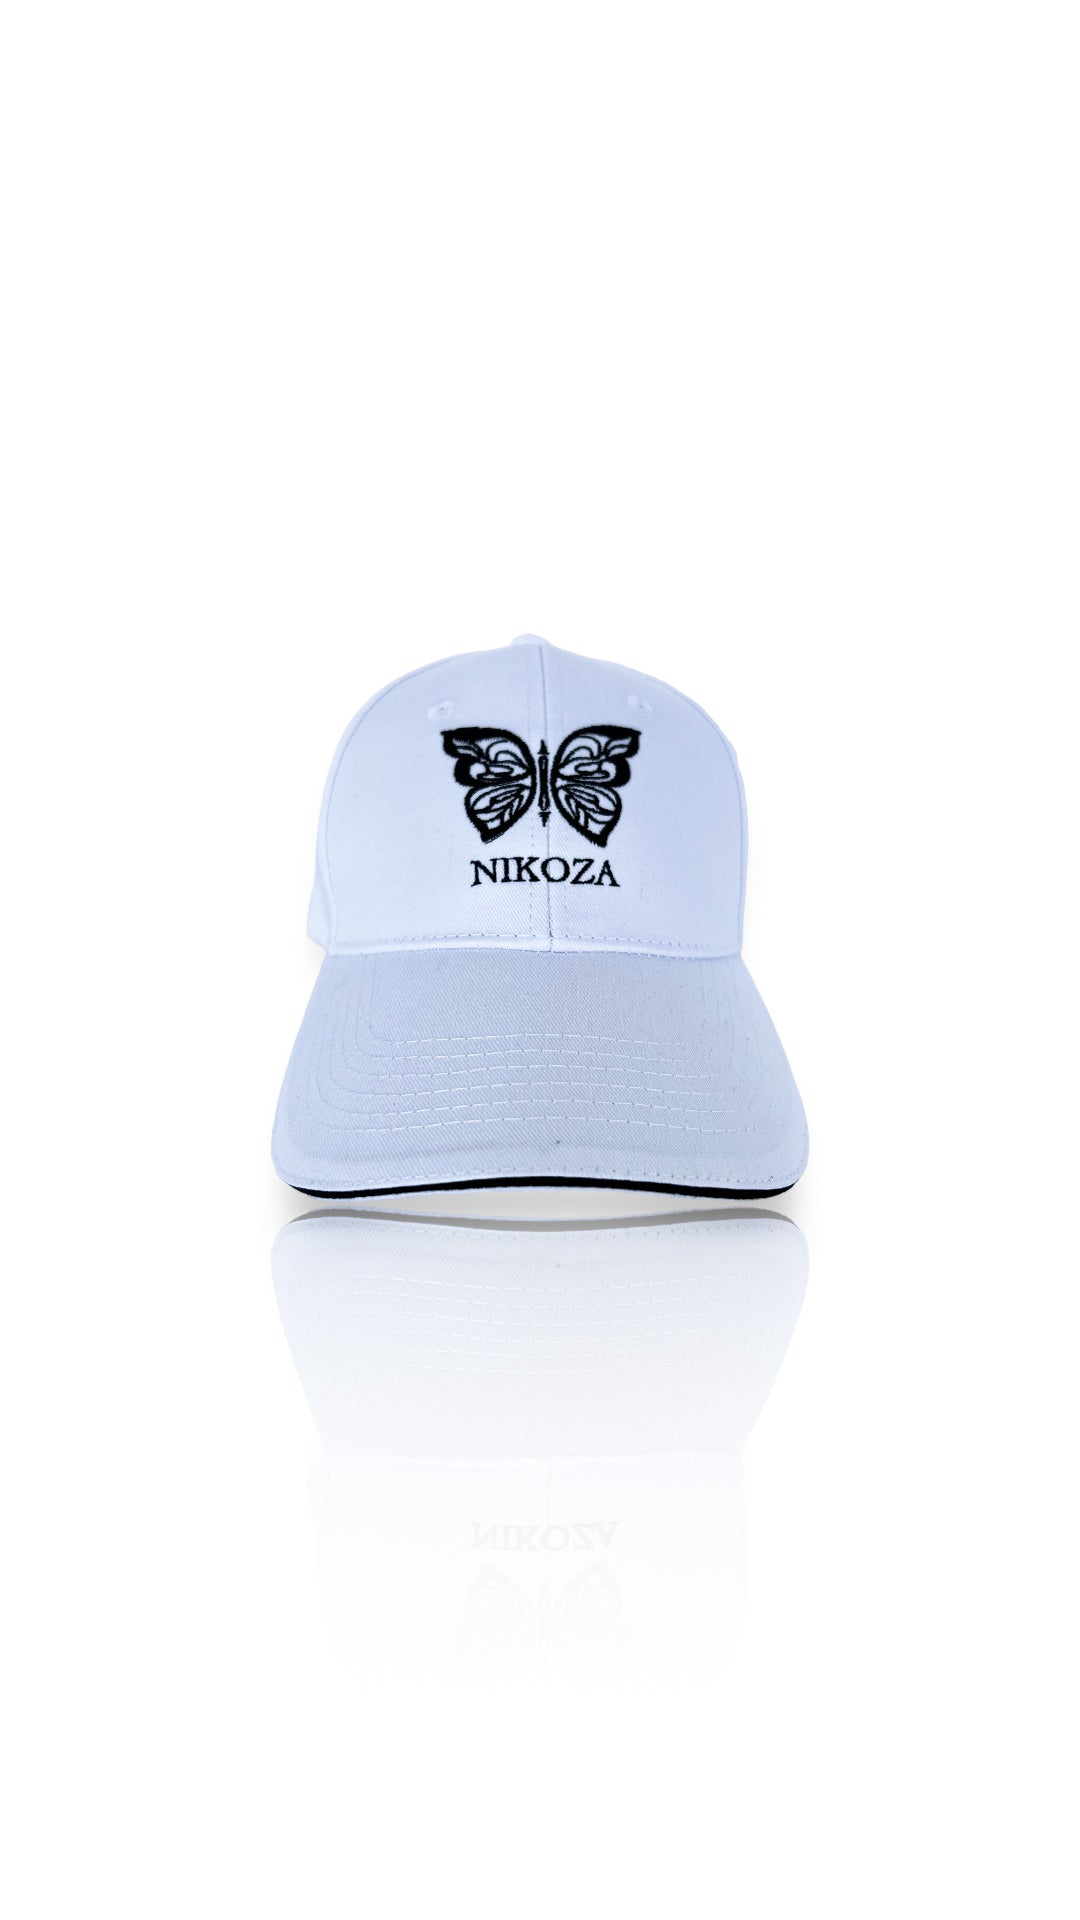 Hats White Copy of White Nikoza baseball hat NIKOZA